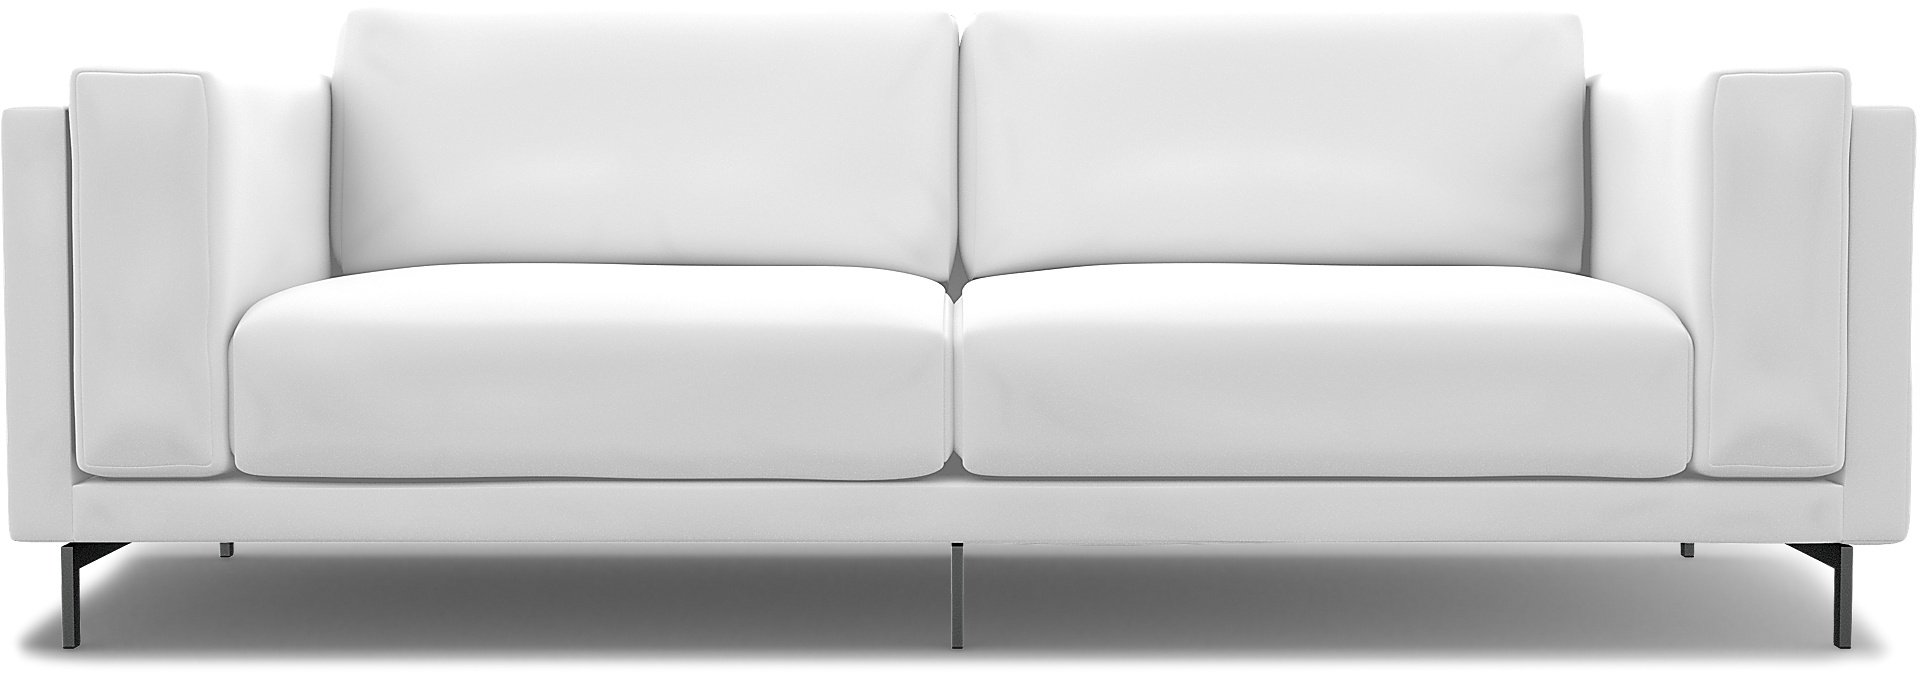 IKEA - Nockeby 3 Seater Sofa Cover, Absolute White, Linen - Bemz